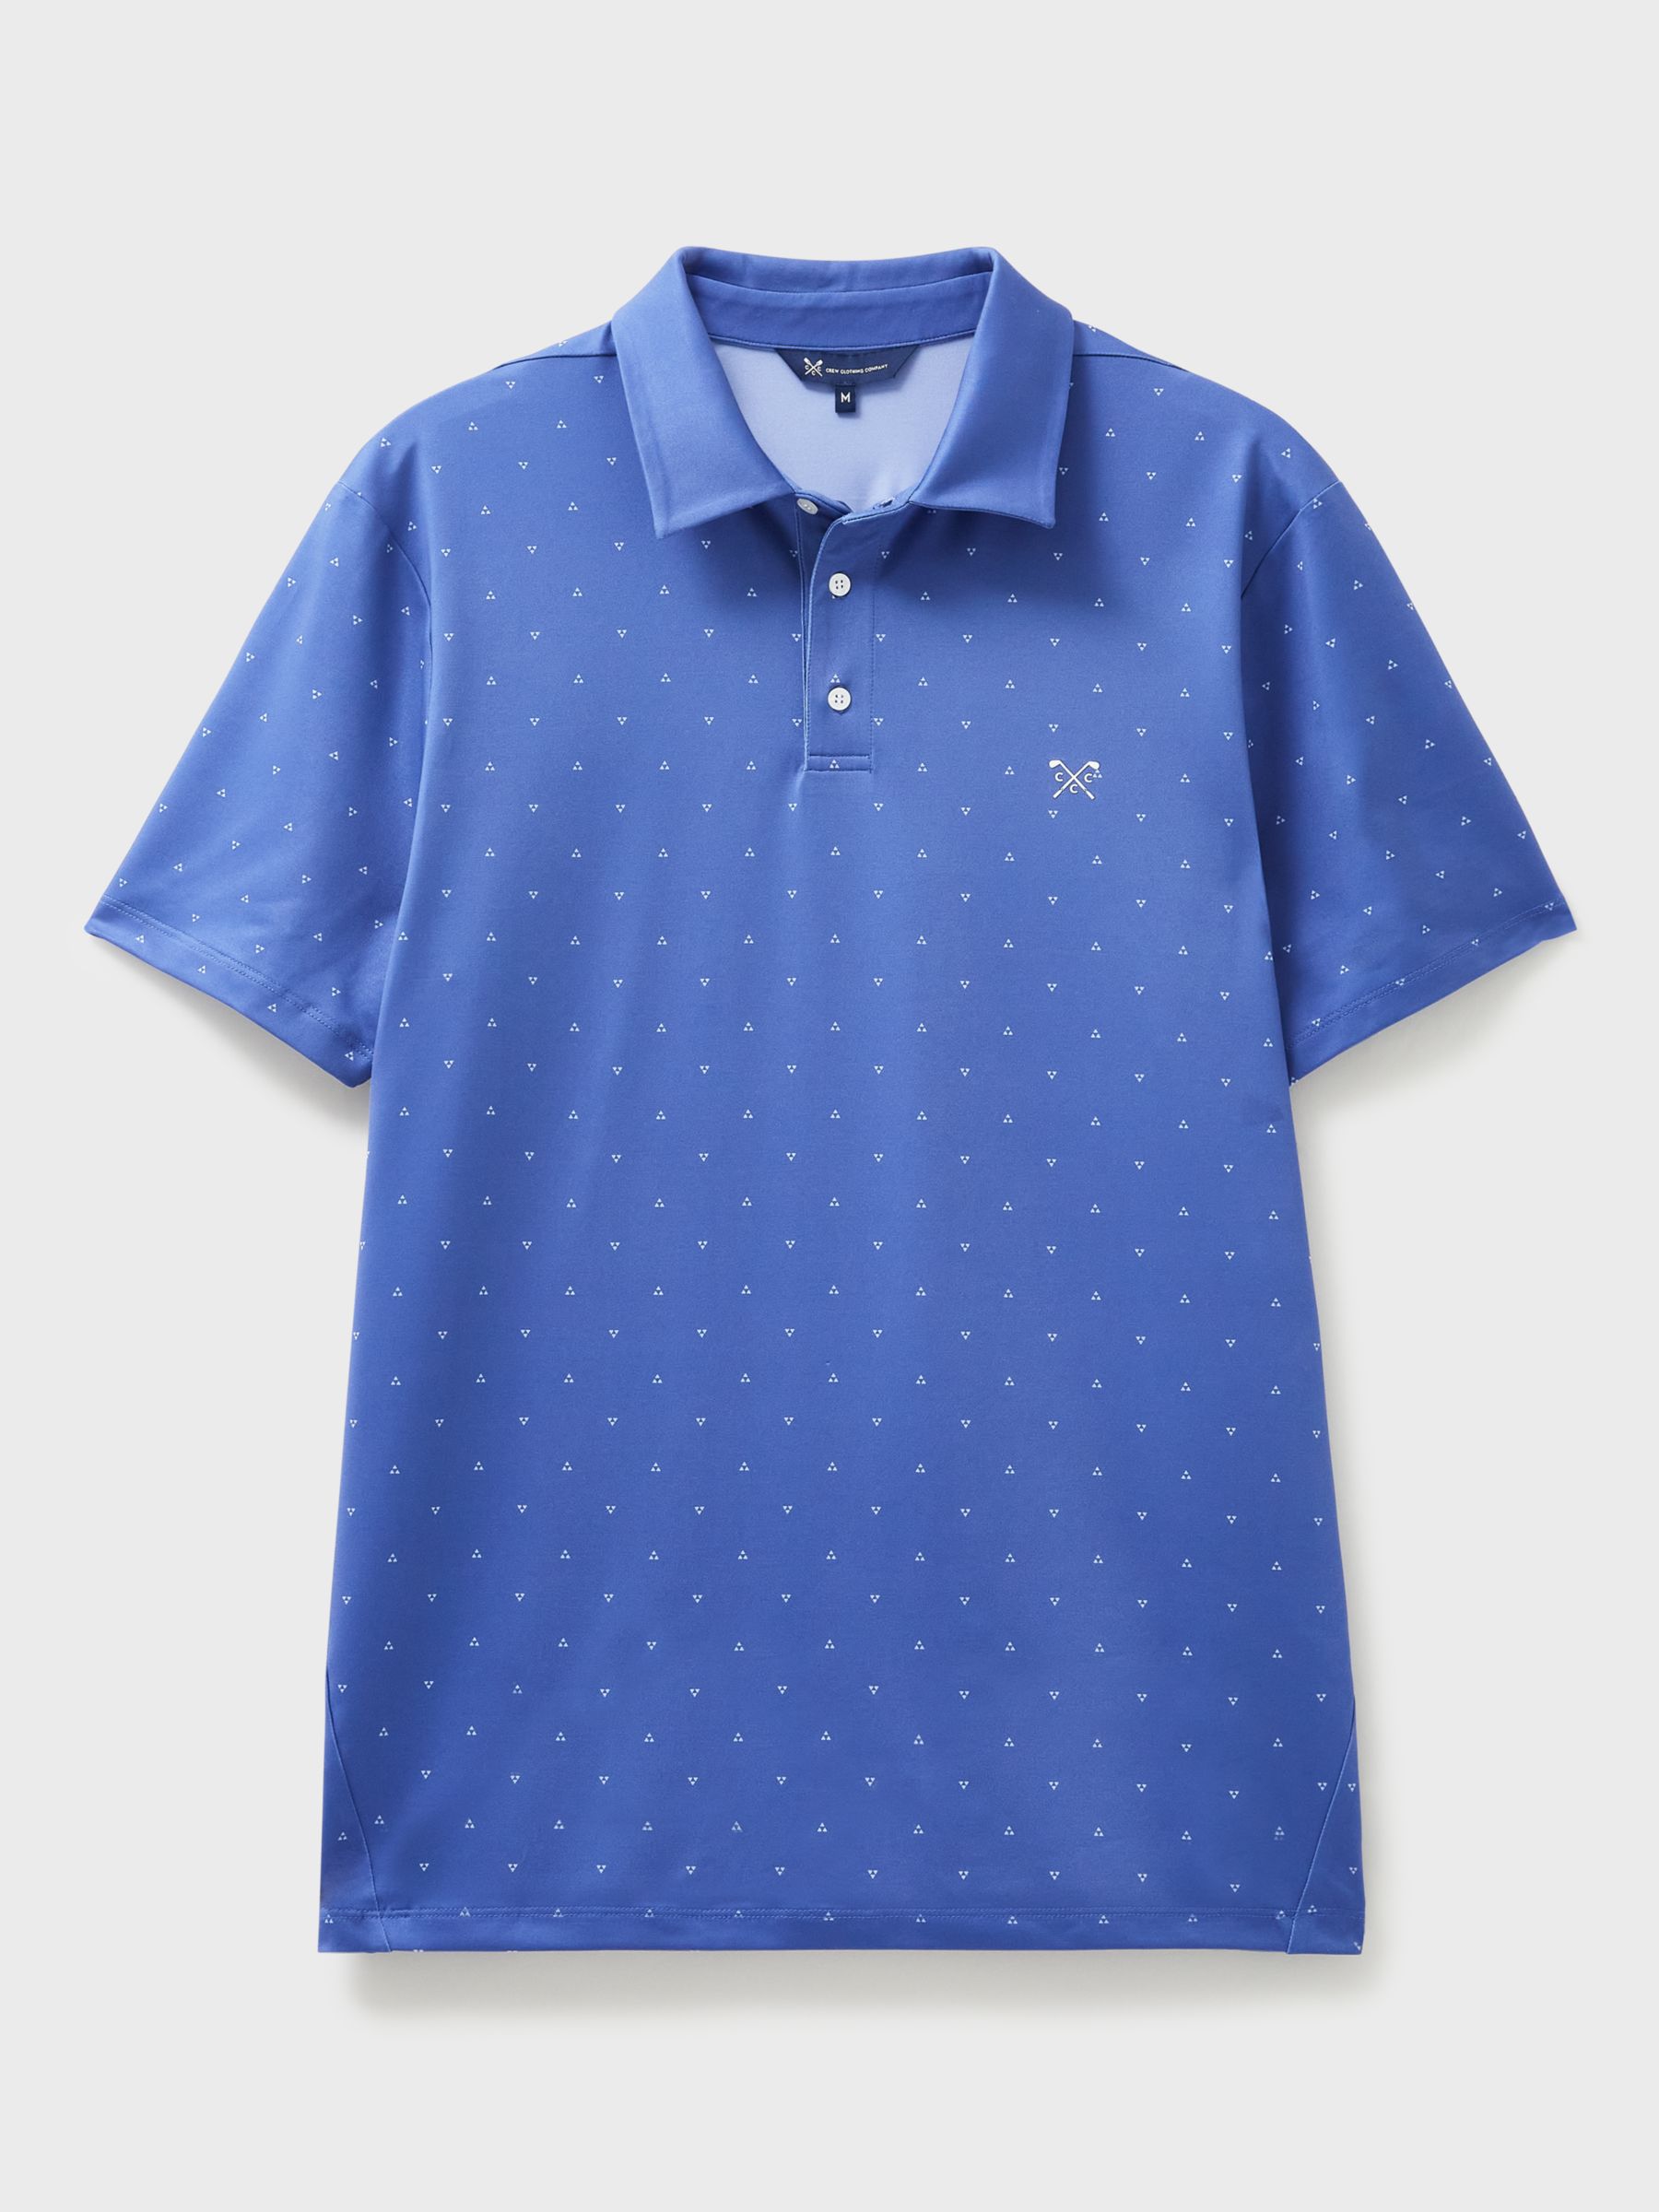 Crew Clothing Match Golf Polo Shirt, Mid Blue, L